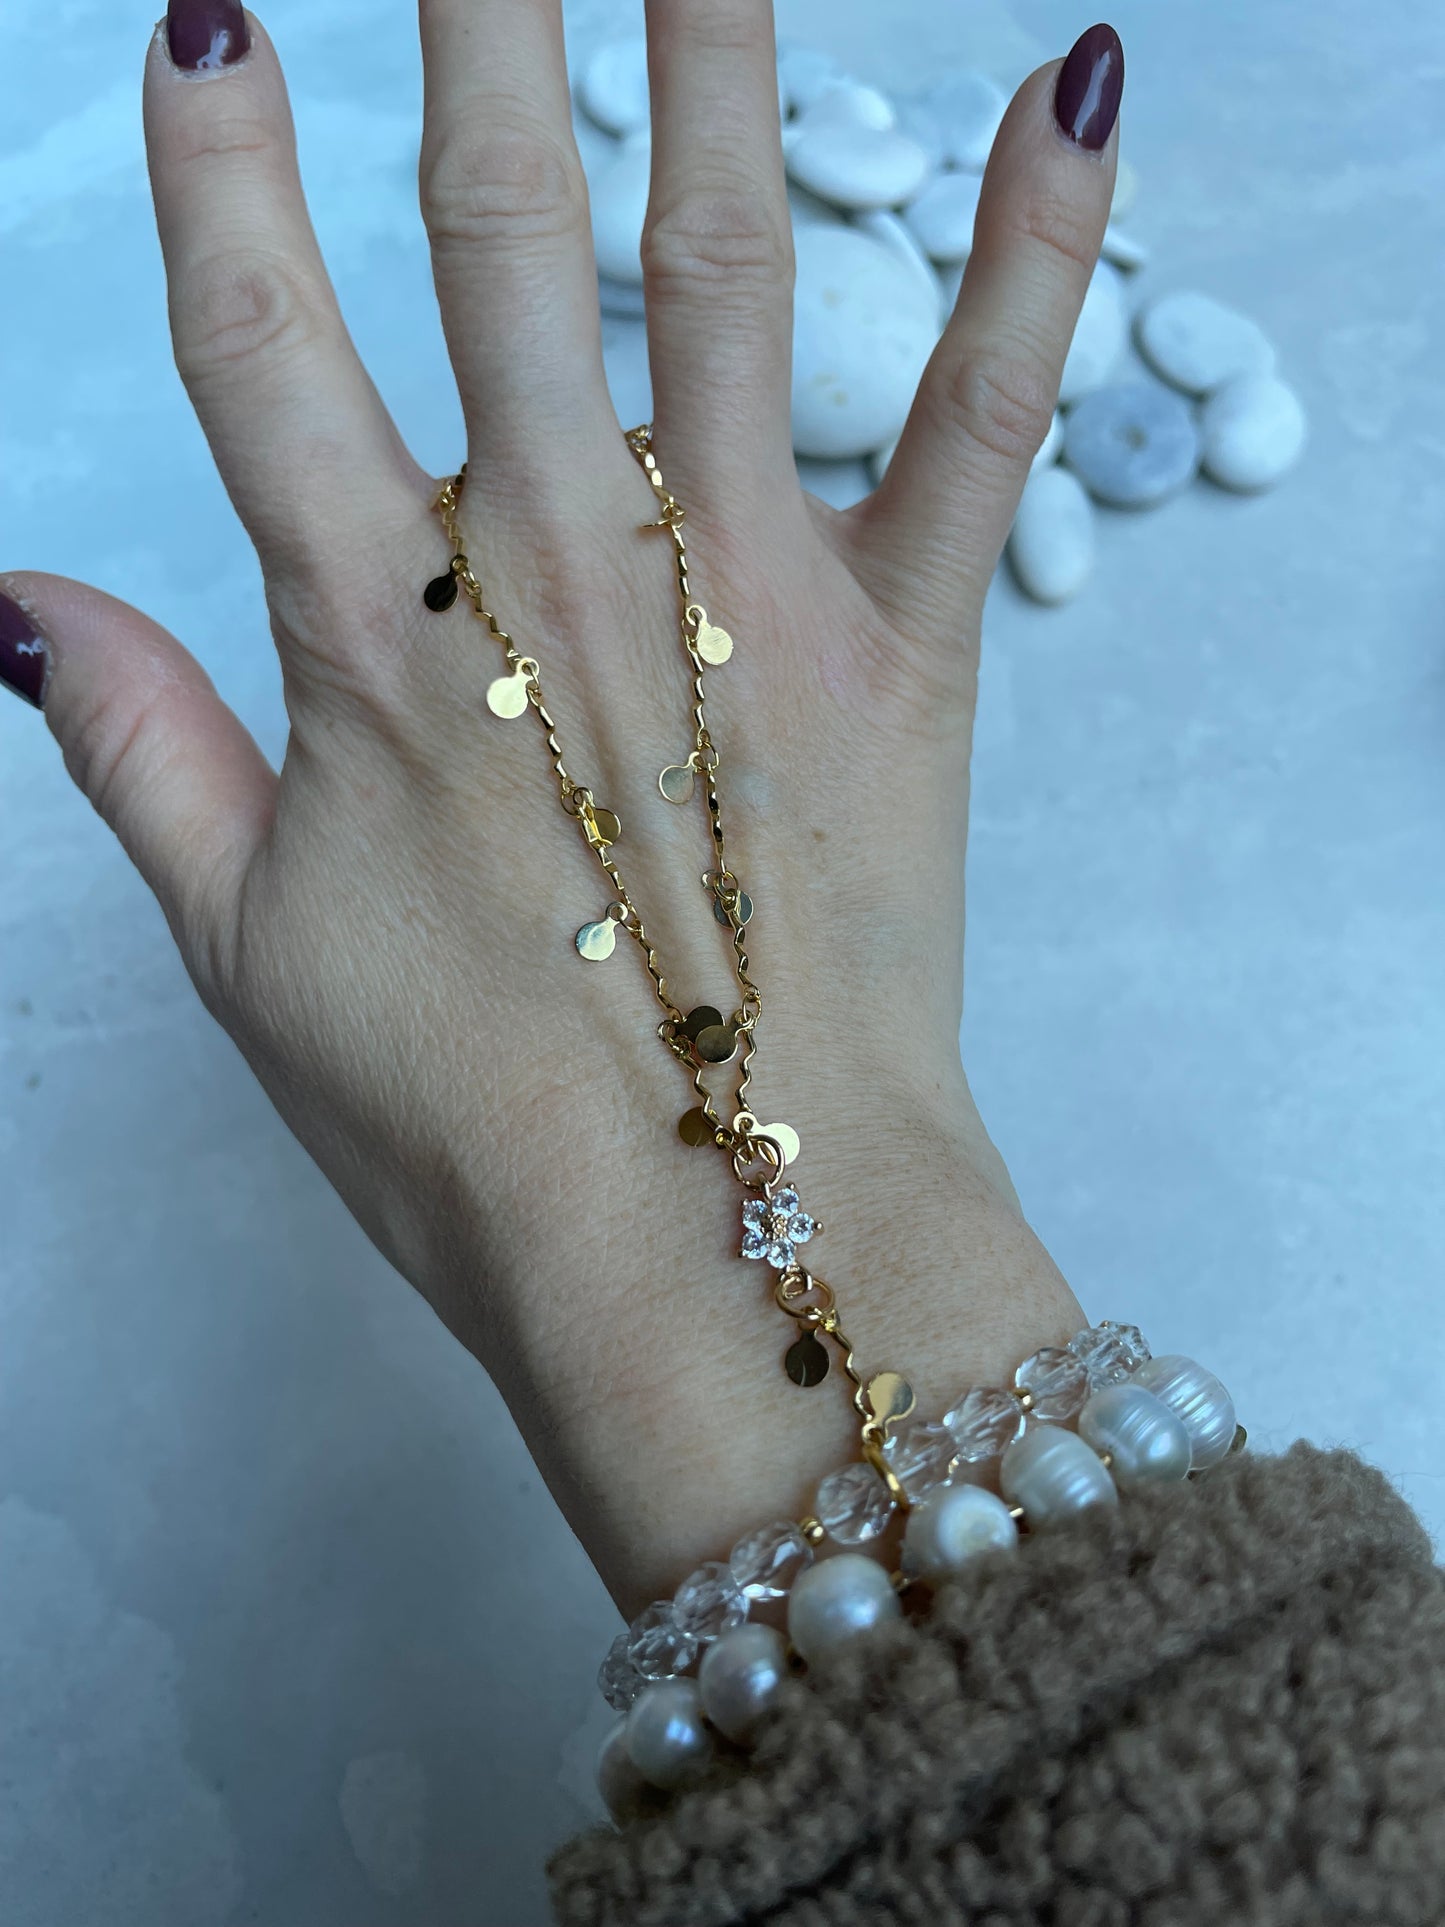 Crystal flower hand jewelry